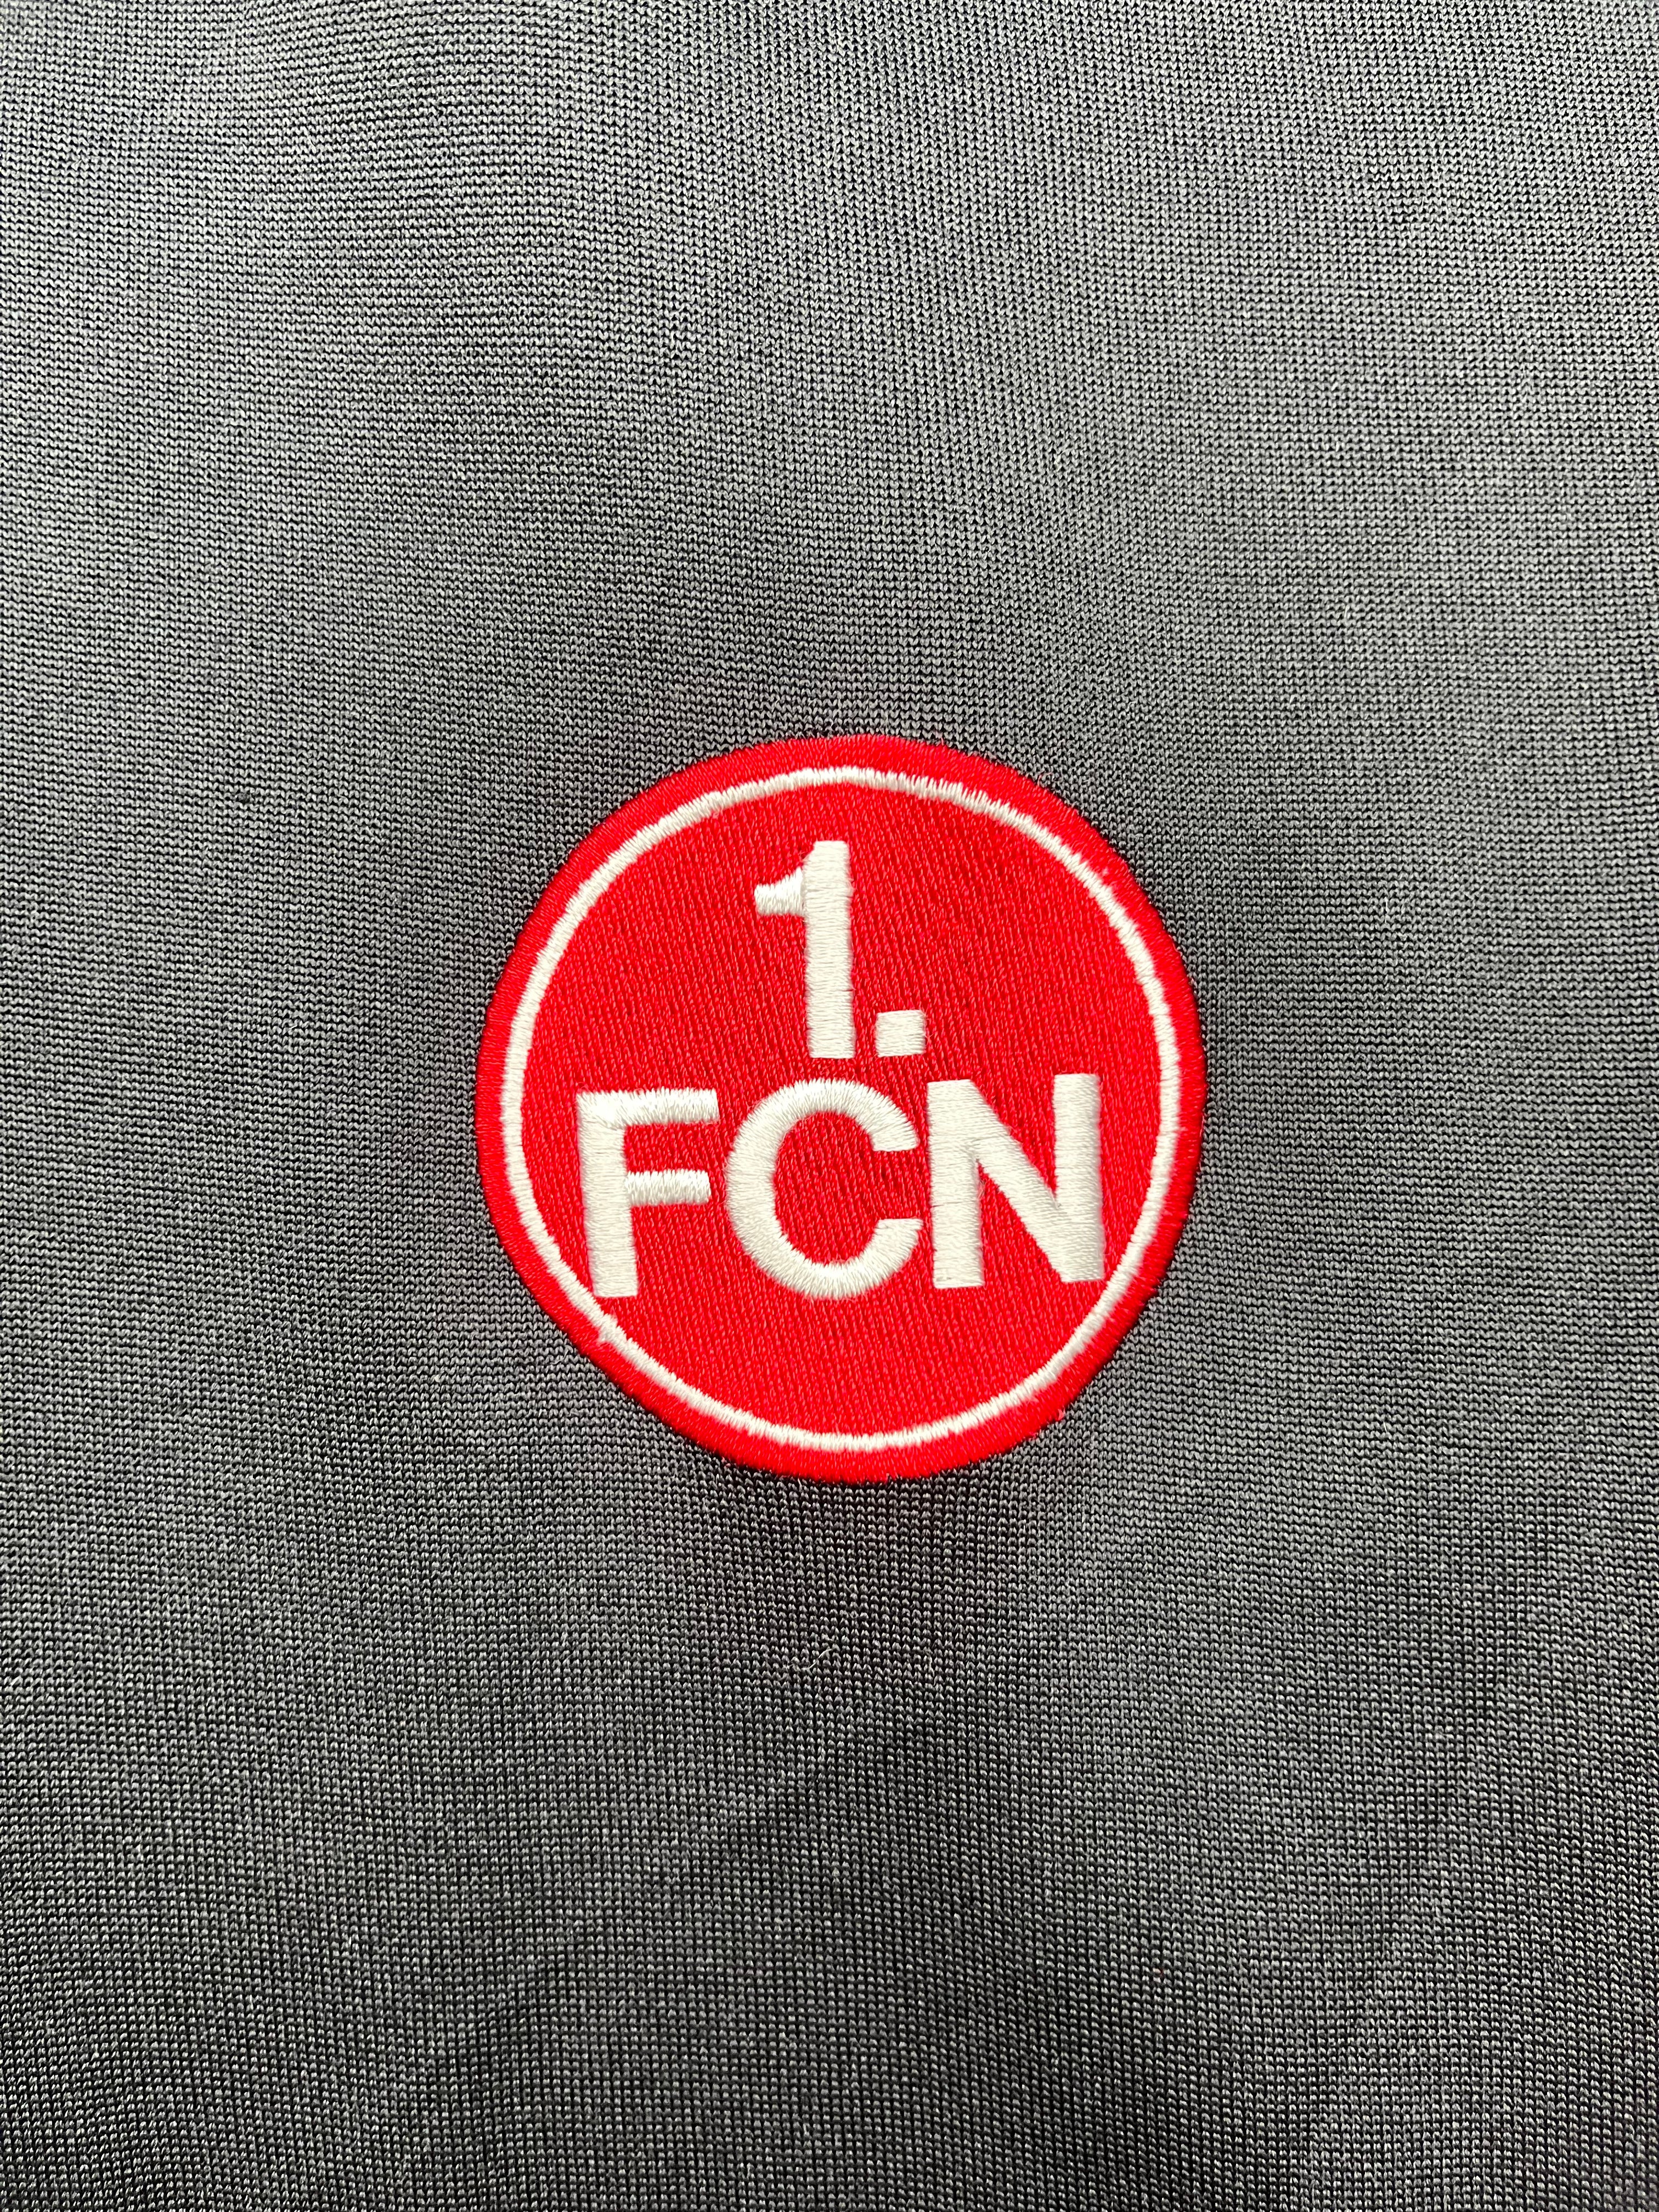 1999/00 FC Nurnberg Track Jacket (M/L) 9/10